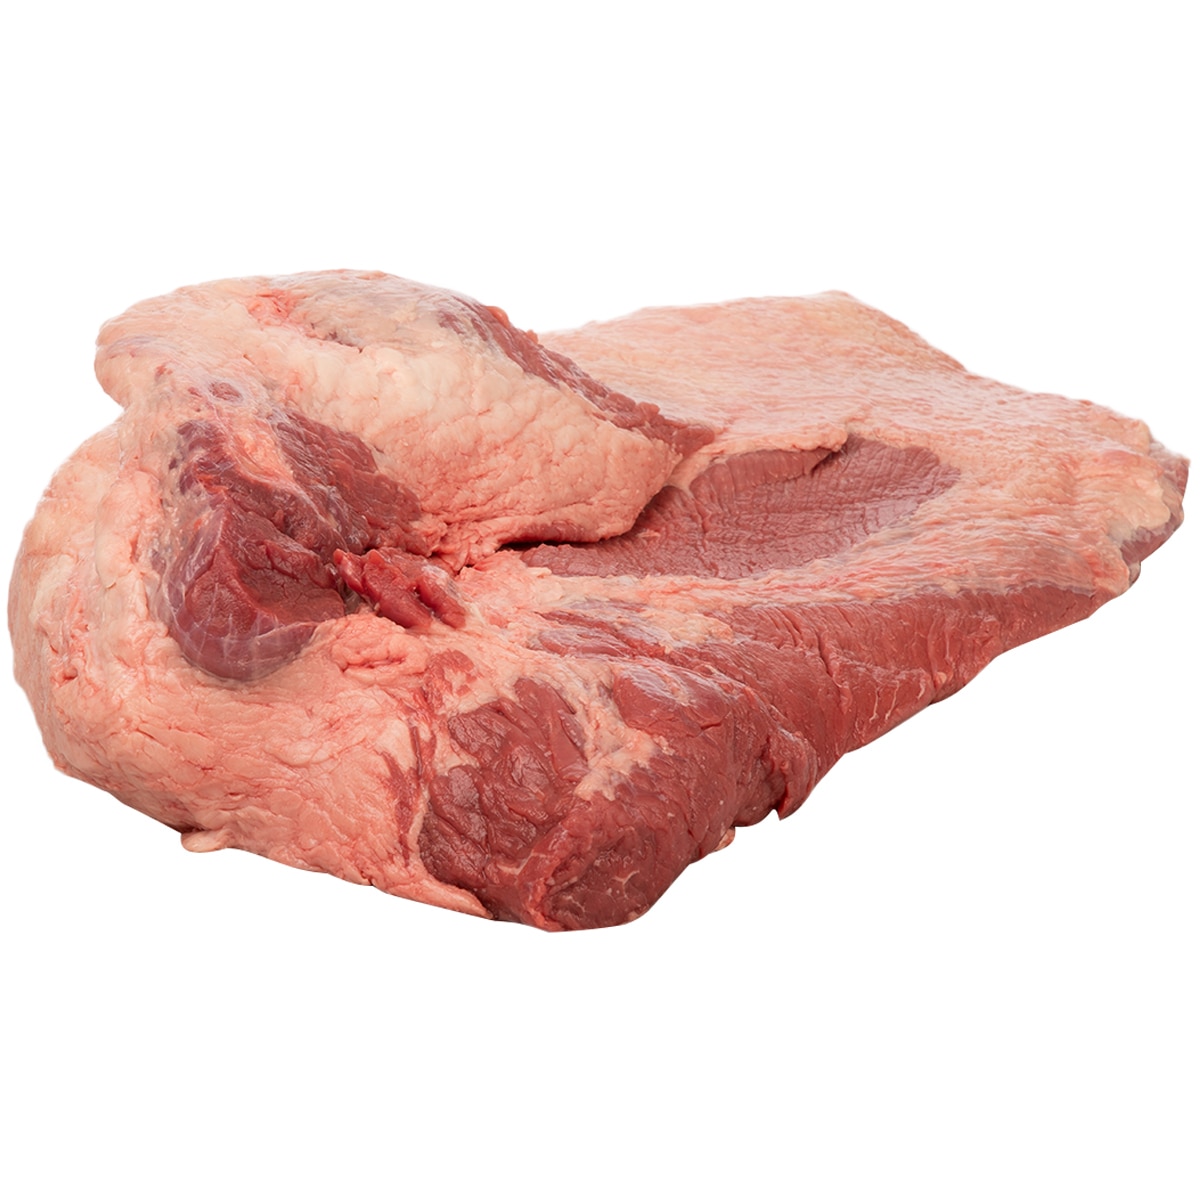 Grainfed Australian Beef Brisket Deckle Off